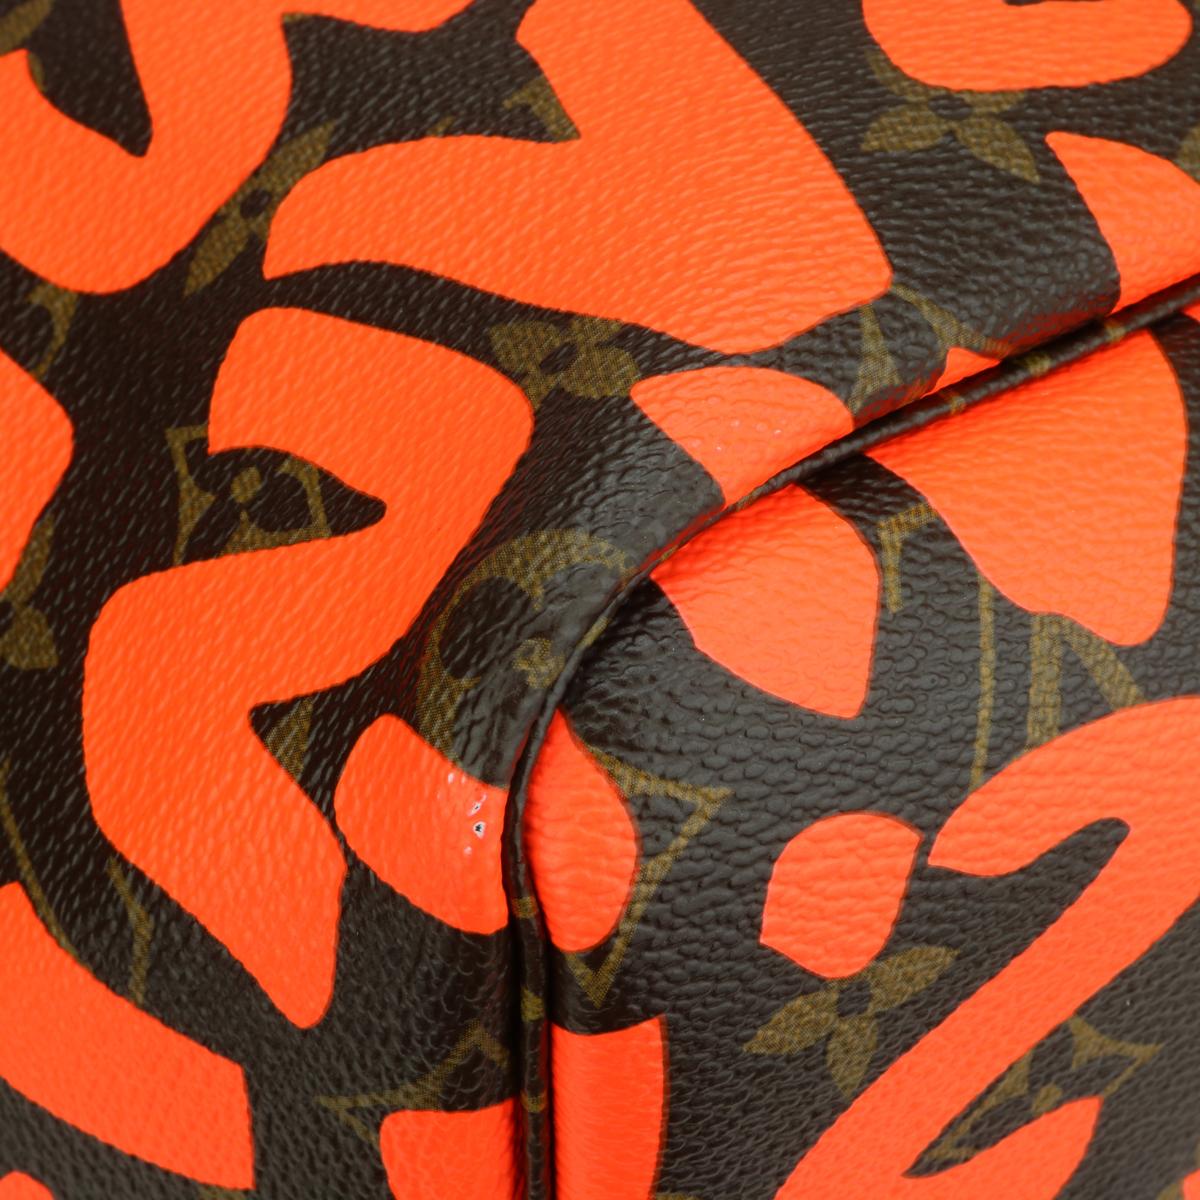 Louis Vuitton Neverfull GM Bag in Monogram Graffiti with Orange Interior 2009 7